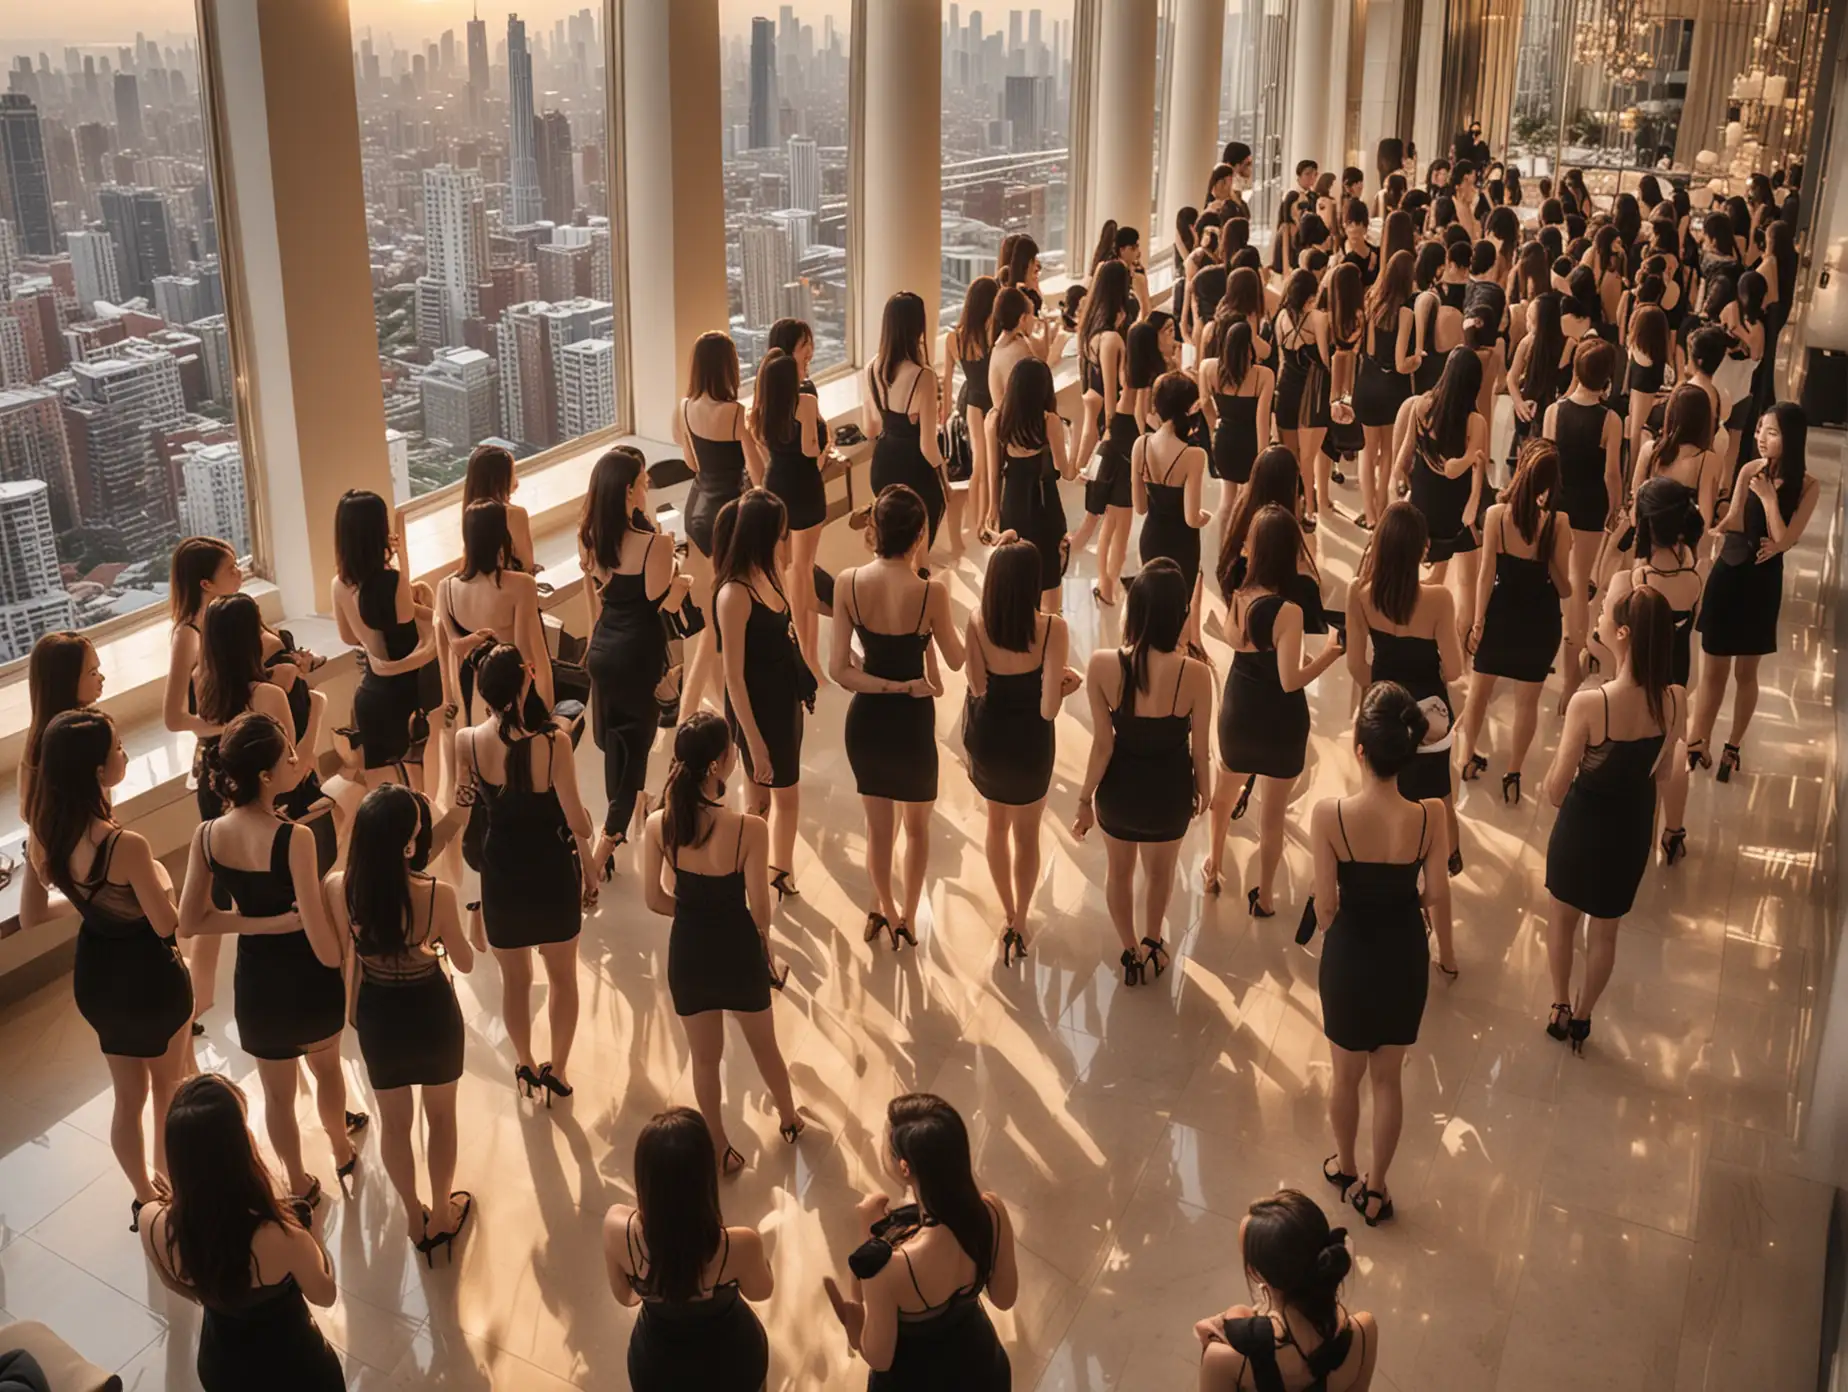 Elegant-Gathering-of-Slim-Young-Chinese-Women-in-Stylish-Black-Dresses-at-Sunset